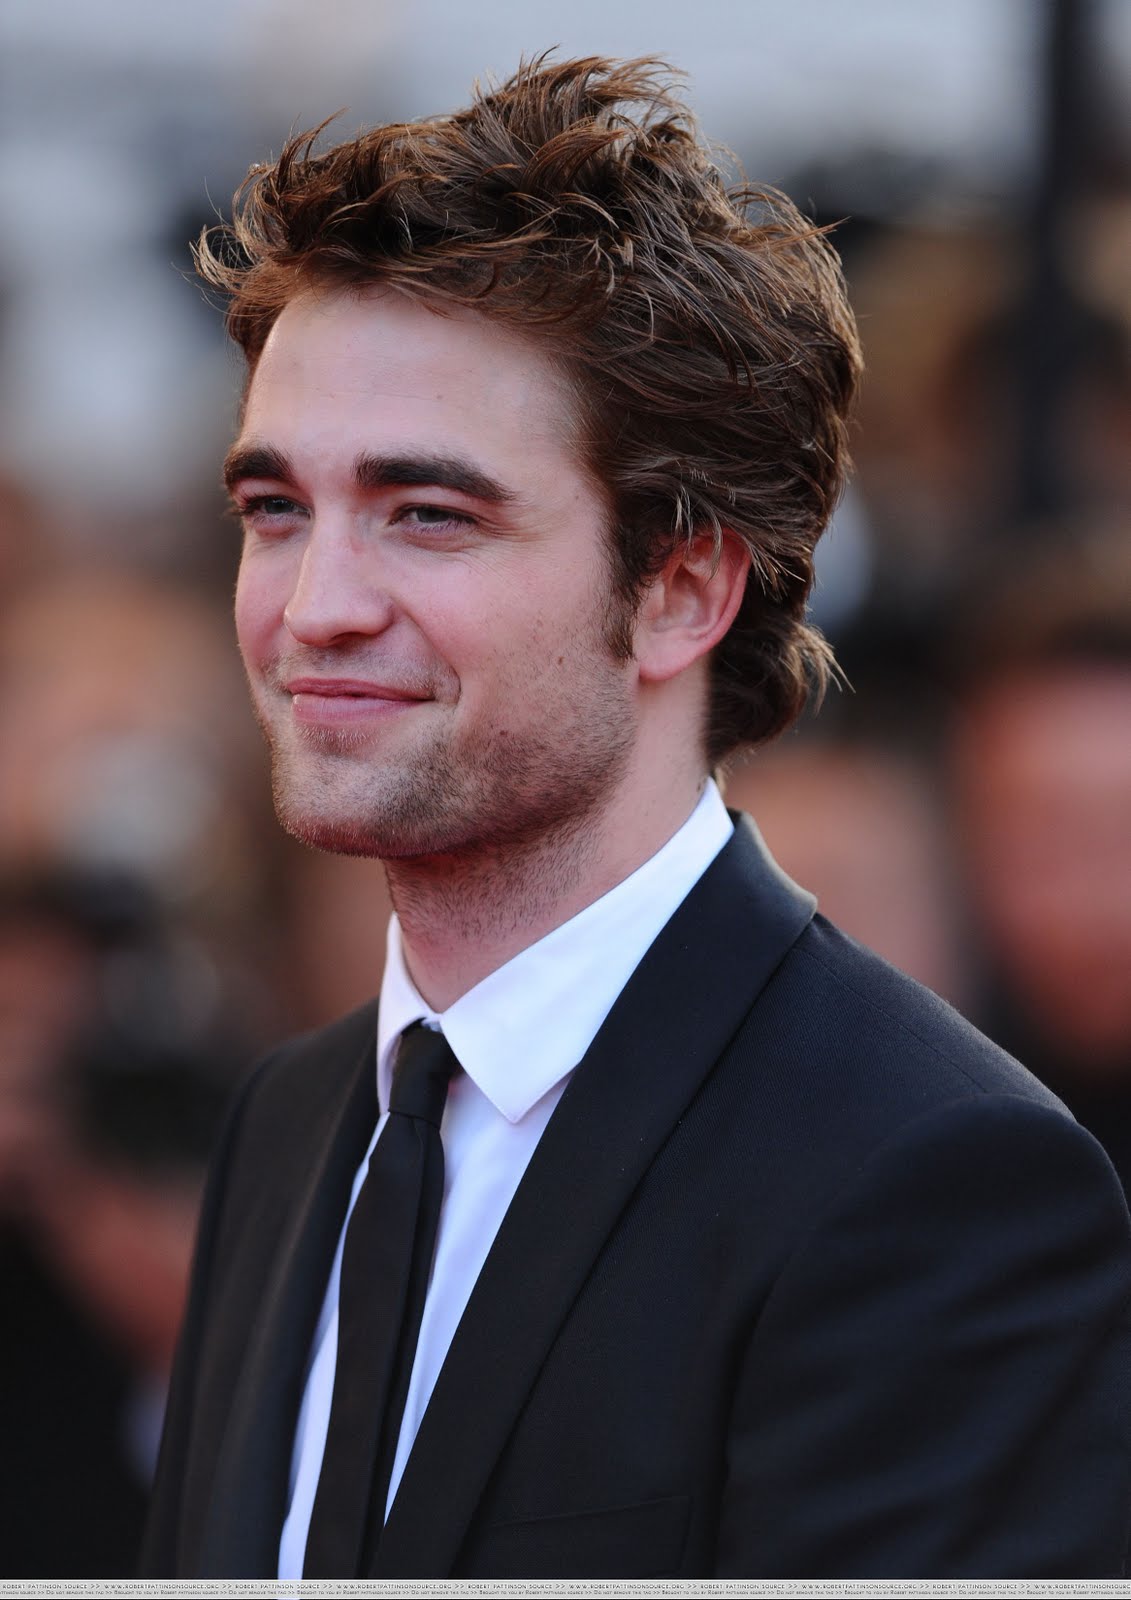 Robert Pattinson News: Robert Pattinson Mingling With The Elite: Makes Rich List 20101131 x 1600